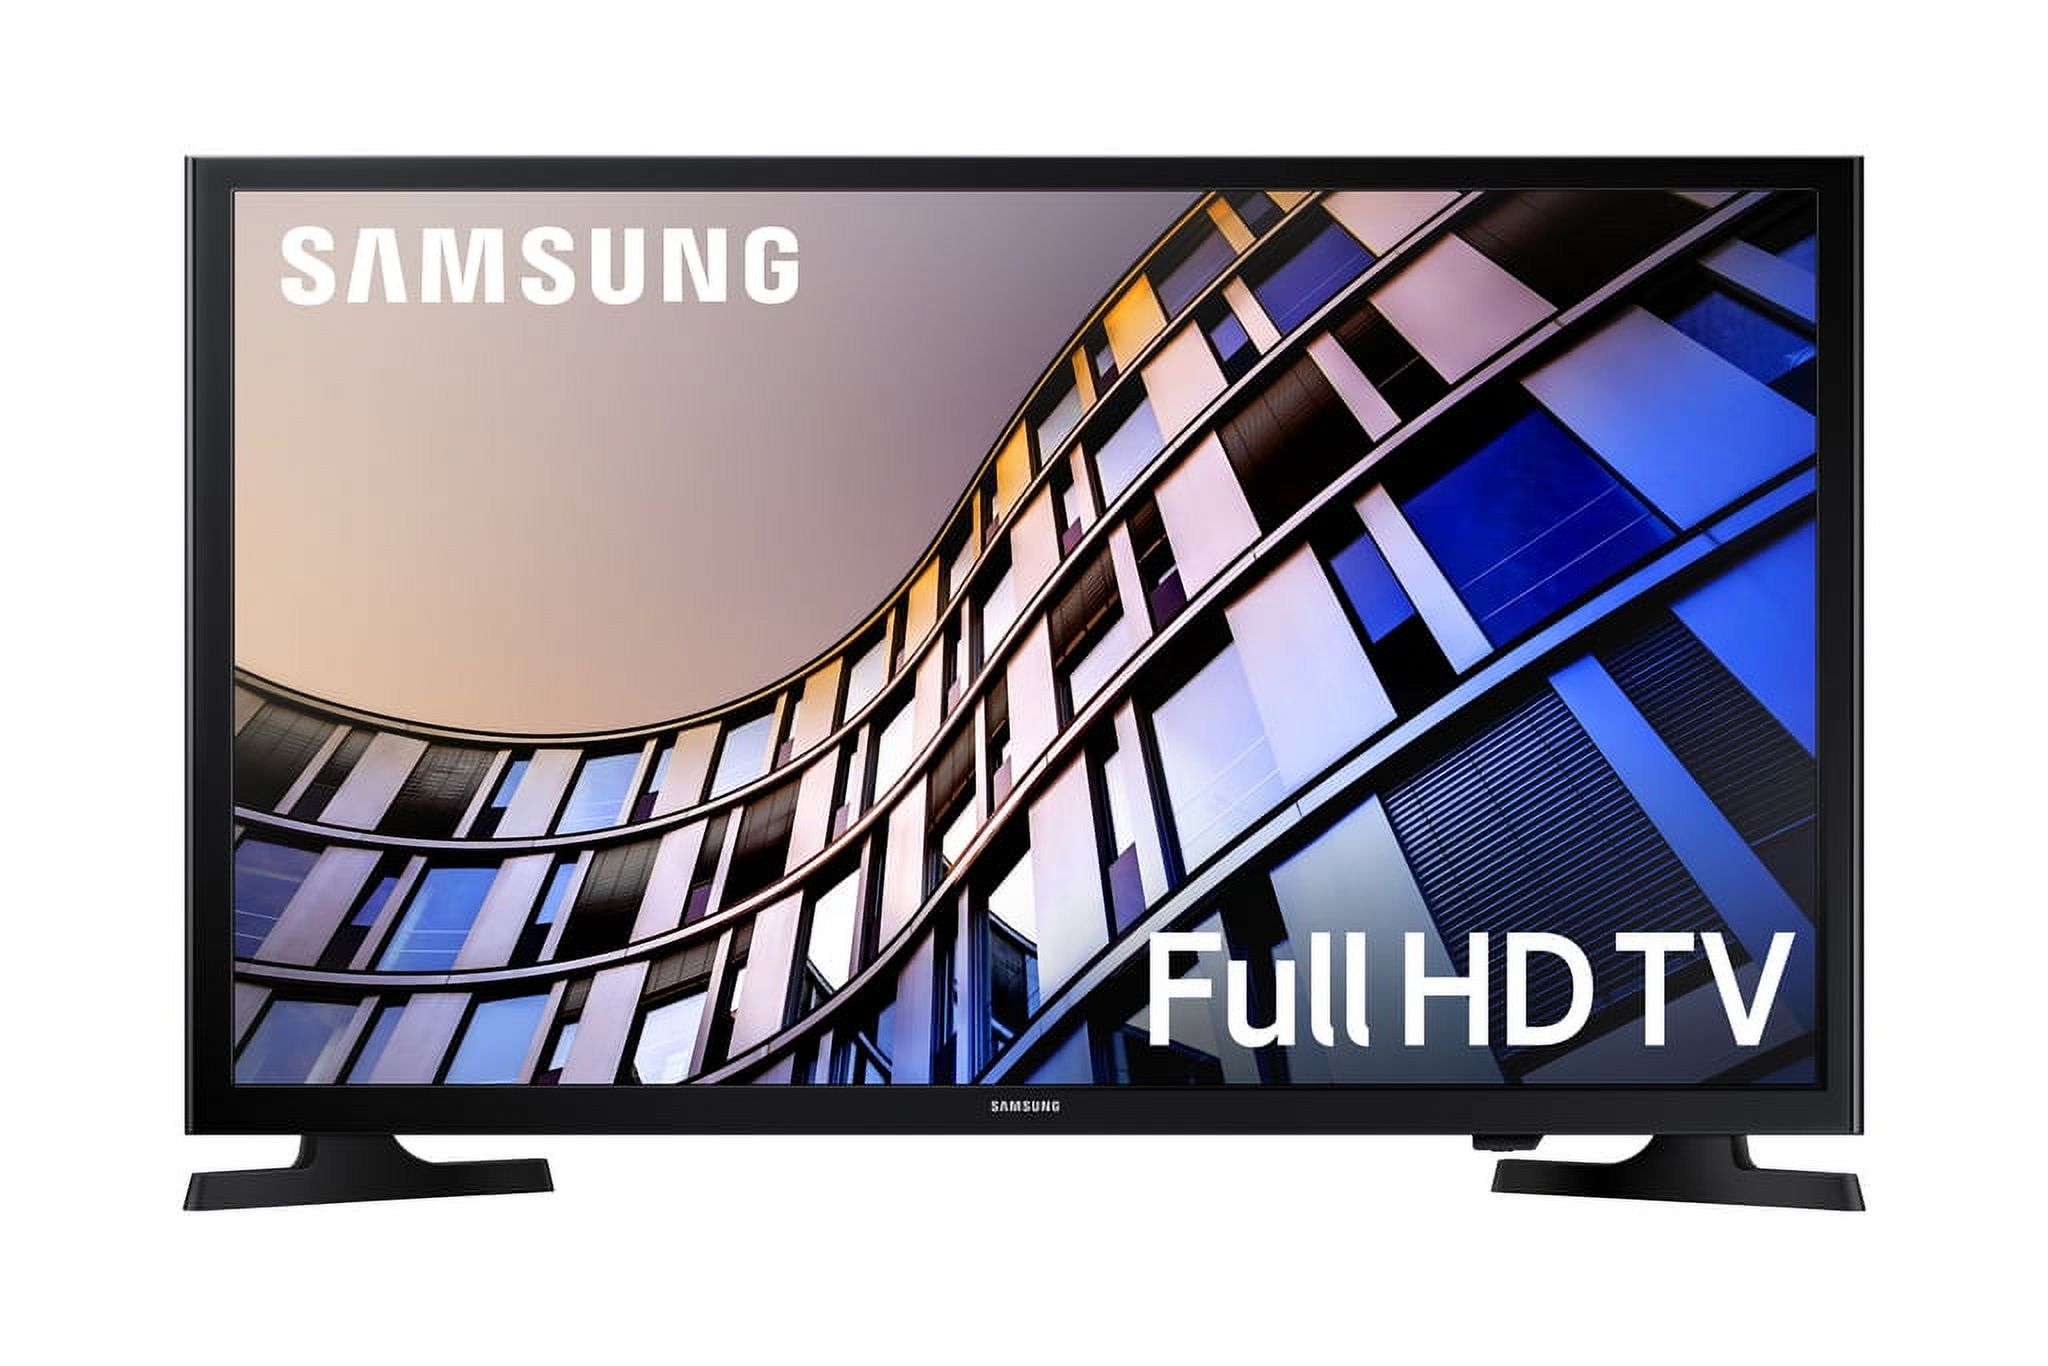 SAMSUNG 32" Class HD (720P) Smart LED TV UN32M4500 - image 1 of 11